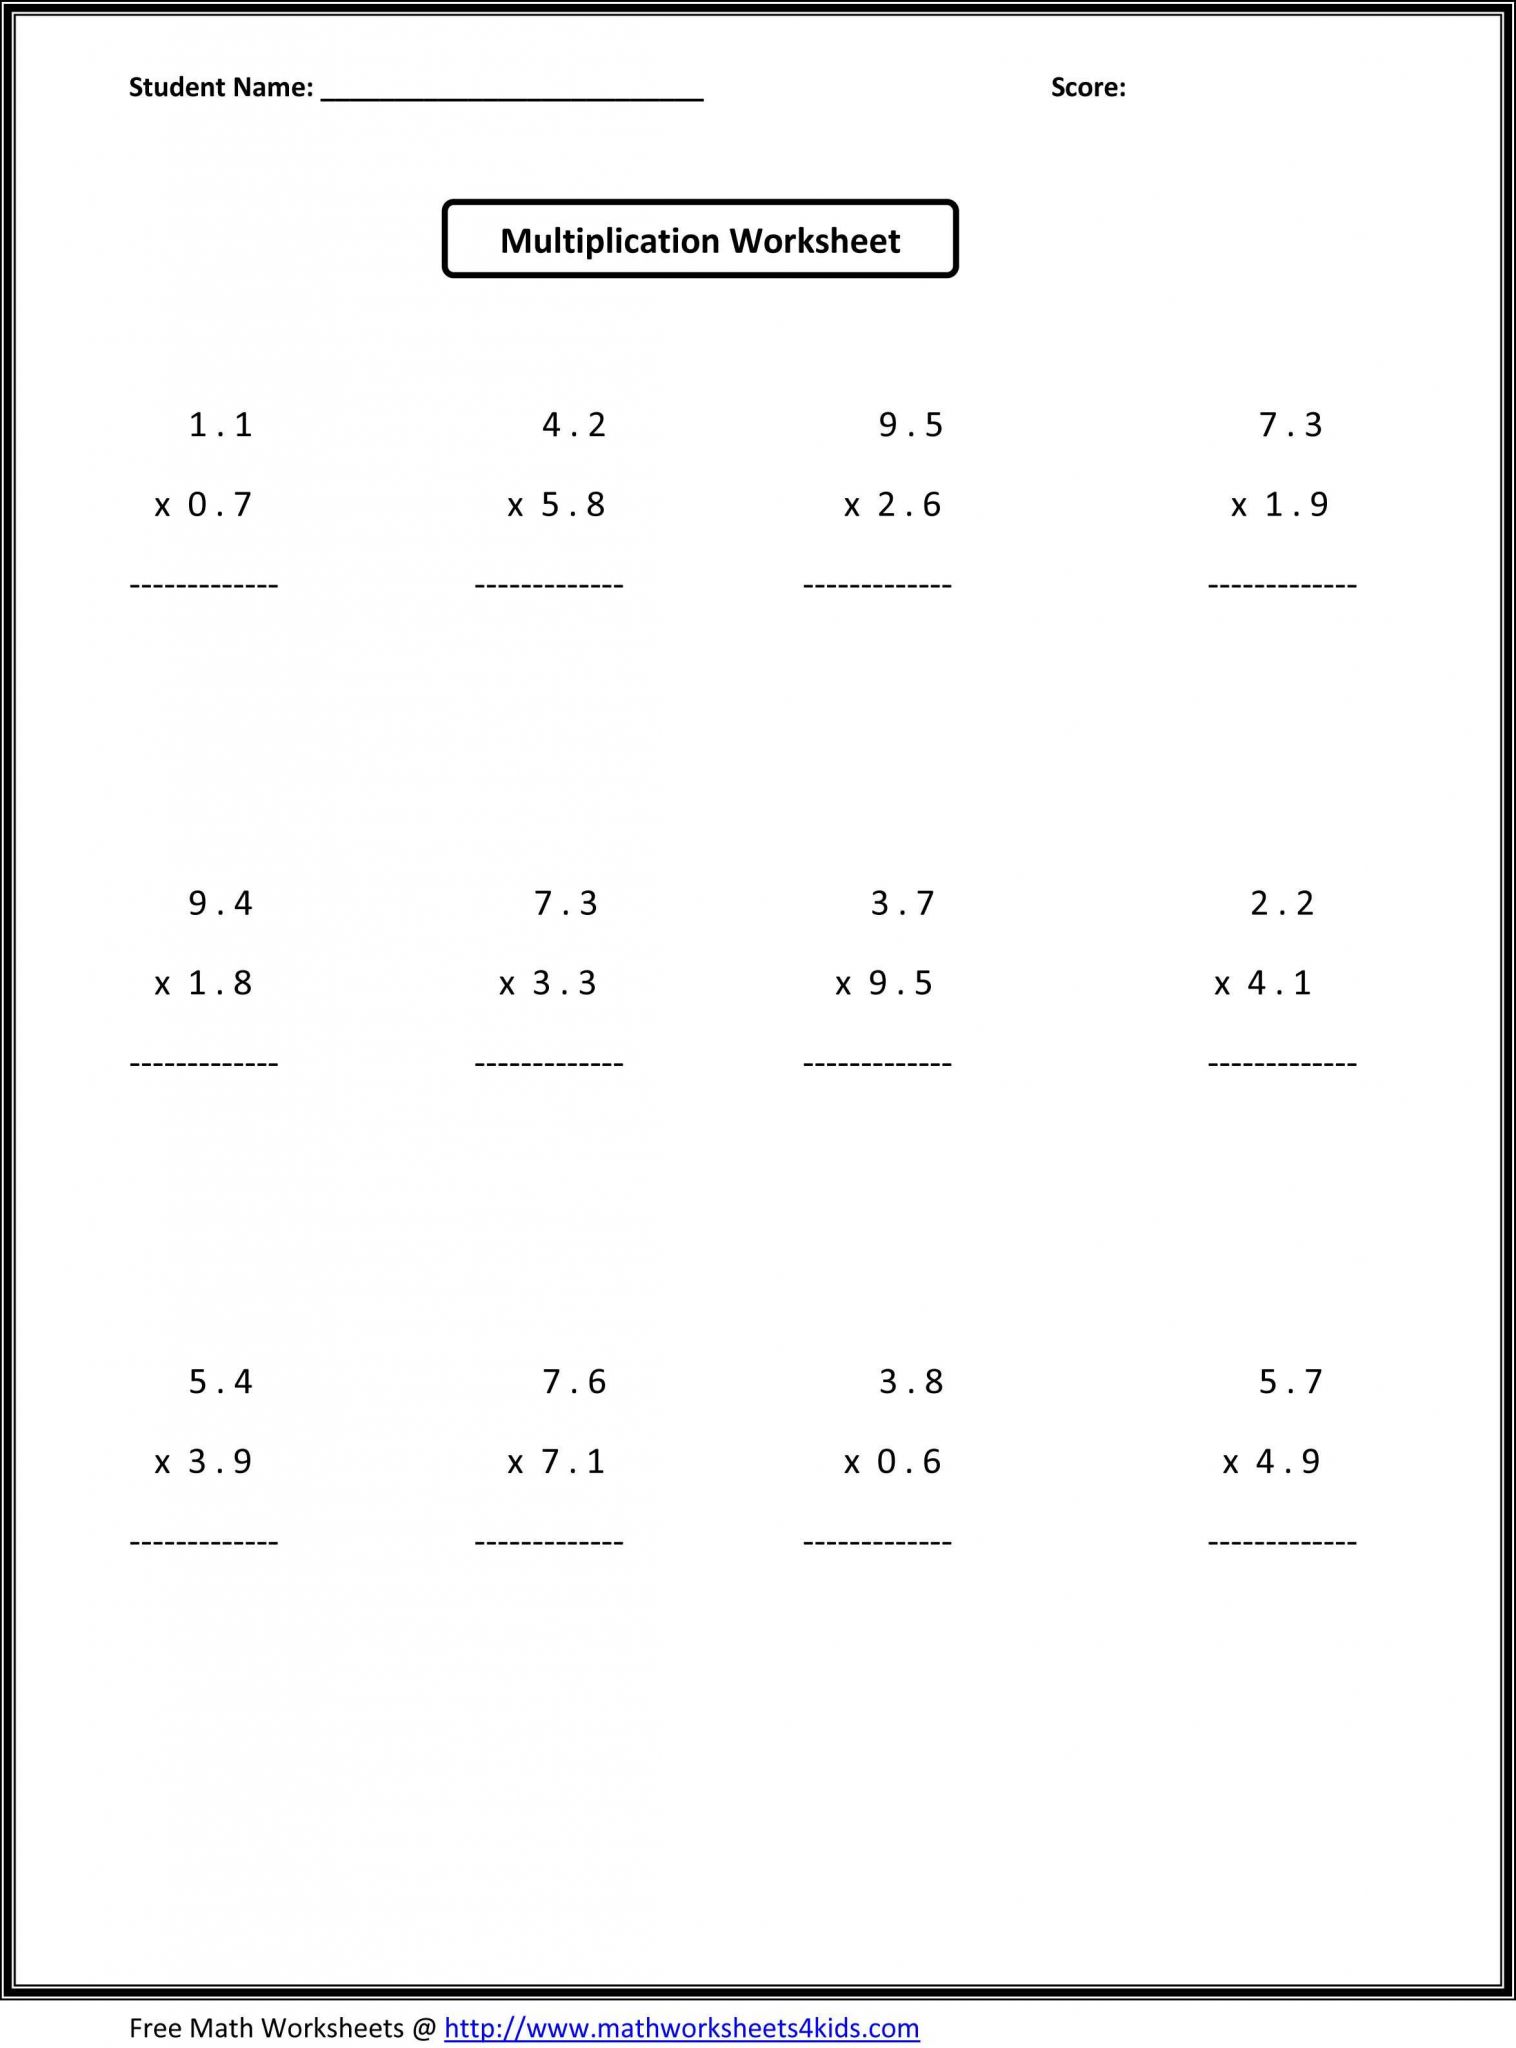 Fidget Spinner Worksheets Free with Old Fashioned Mathworksheet Image Kindergarten Arbeitsblatt